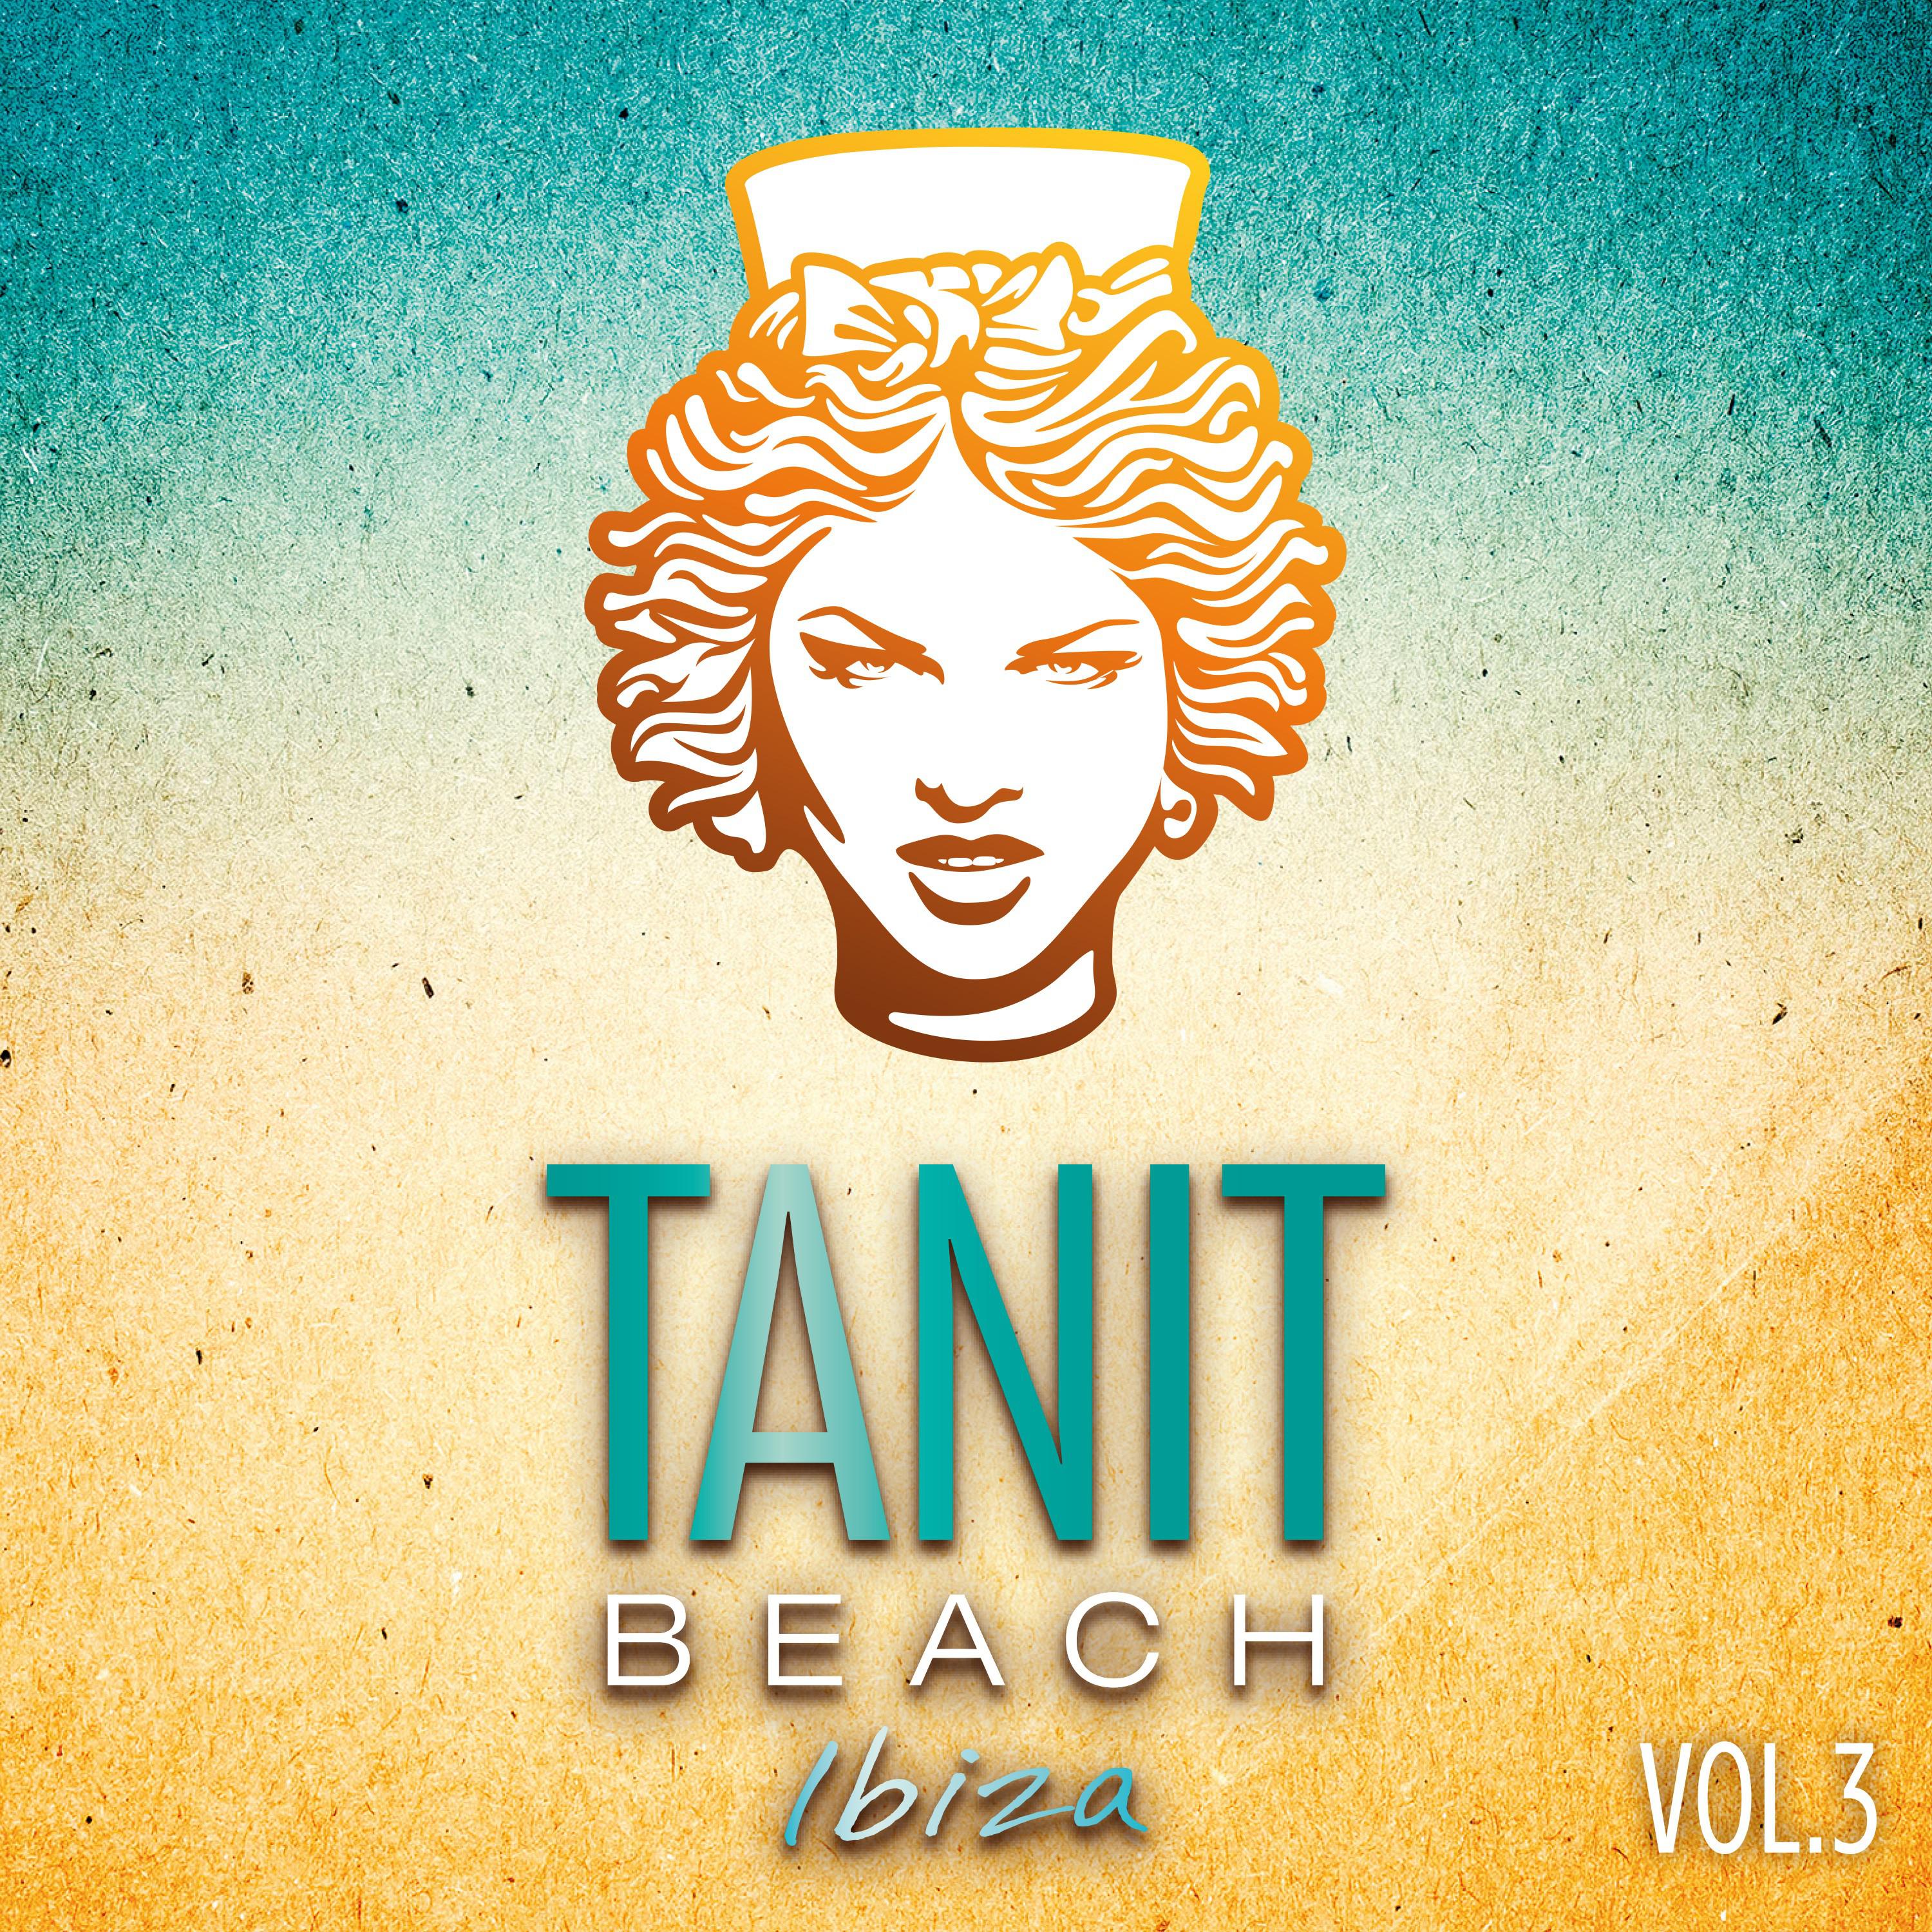 Tanit Beach Ibiza Vol. 3